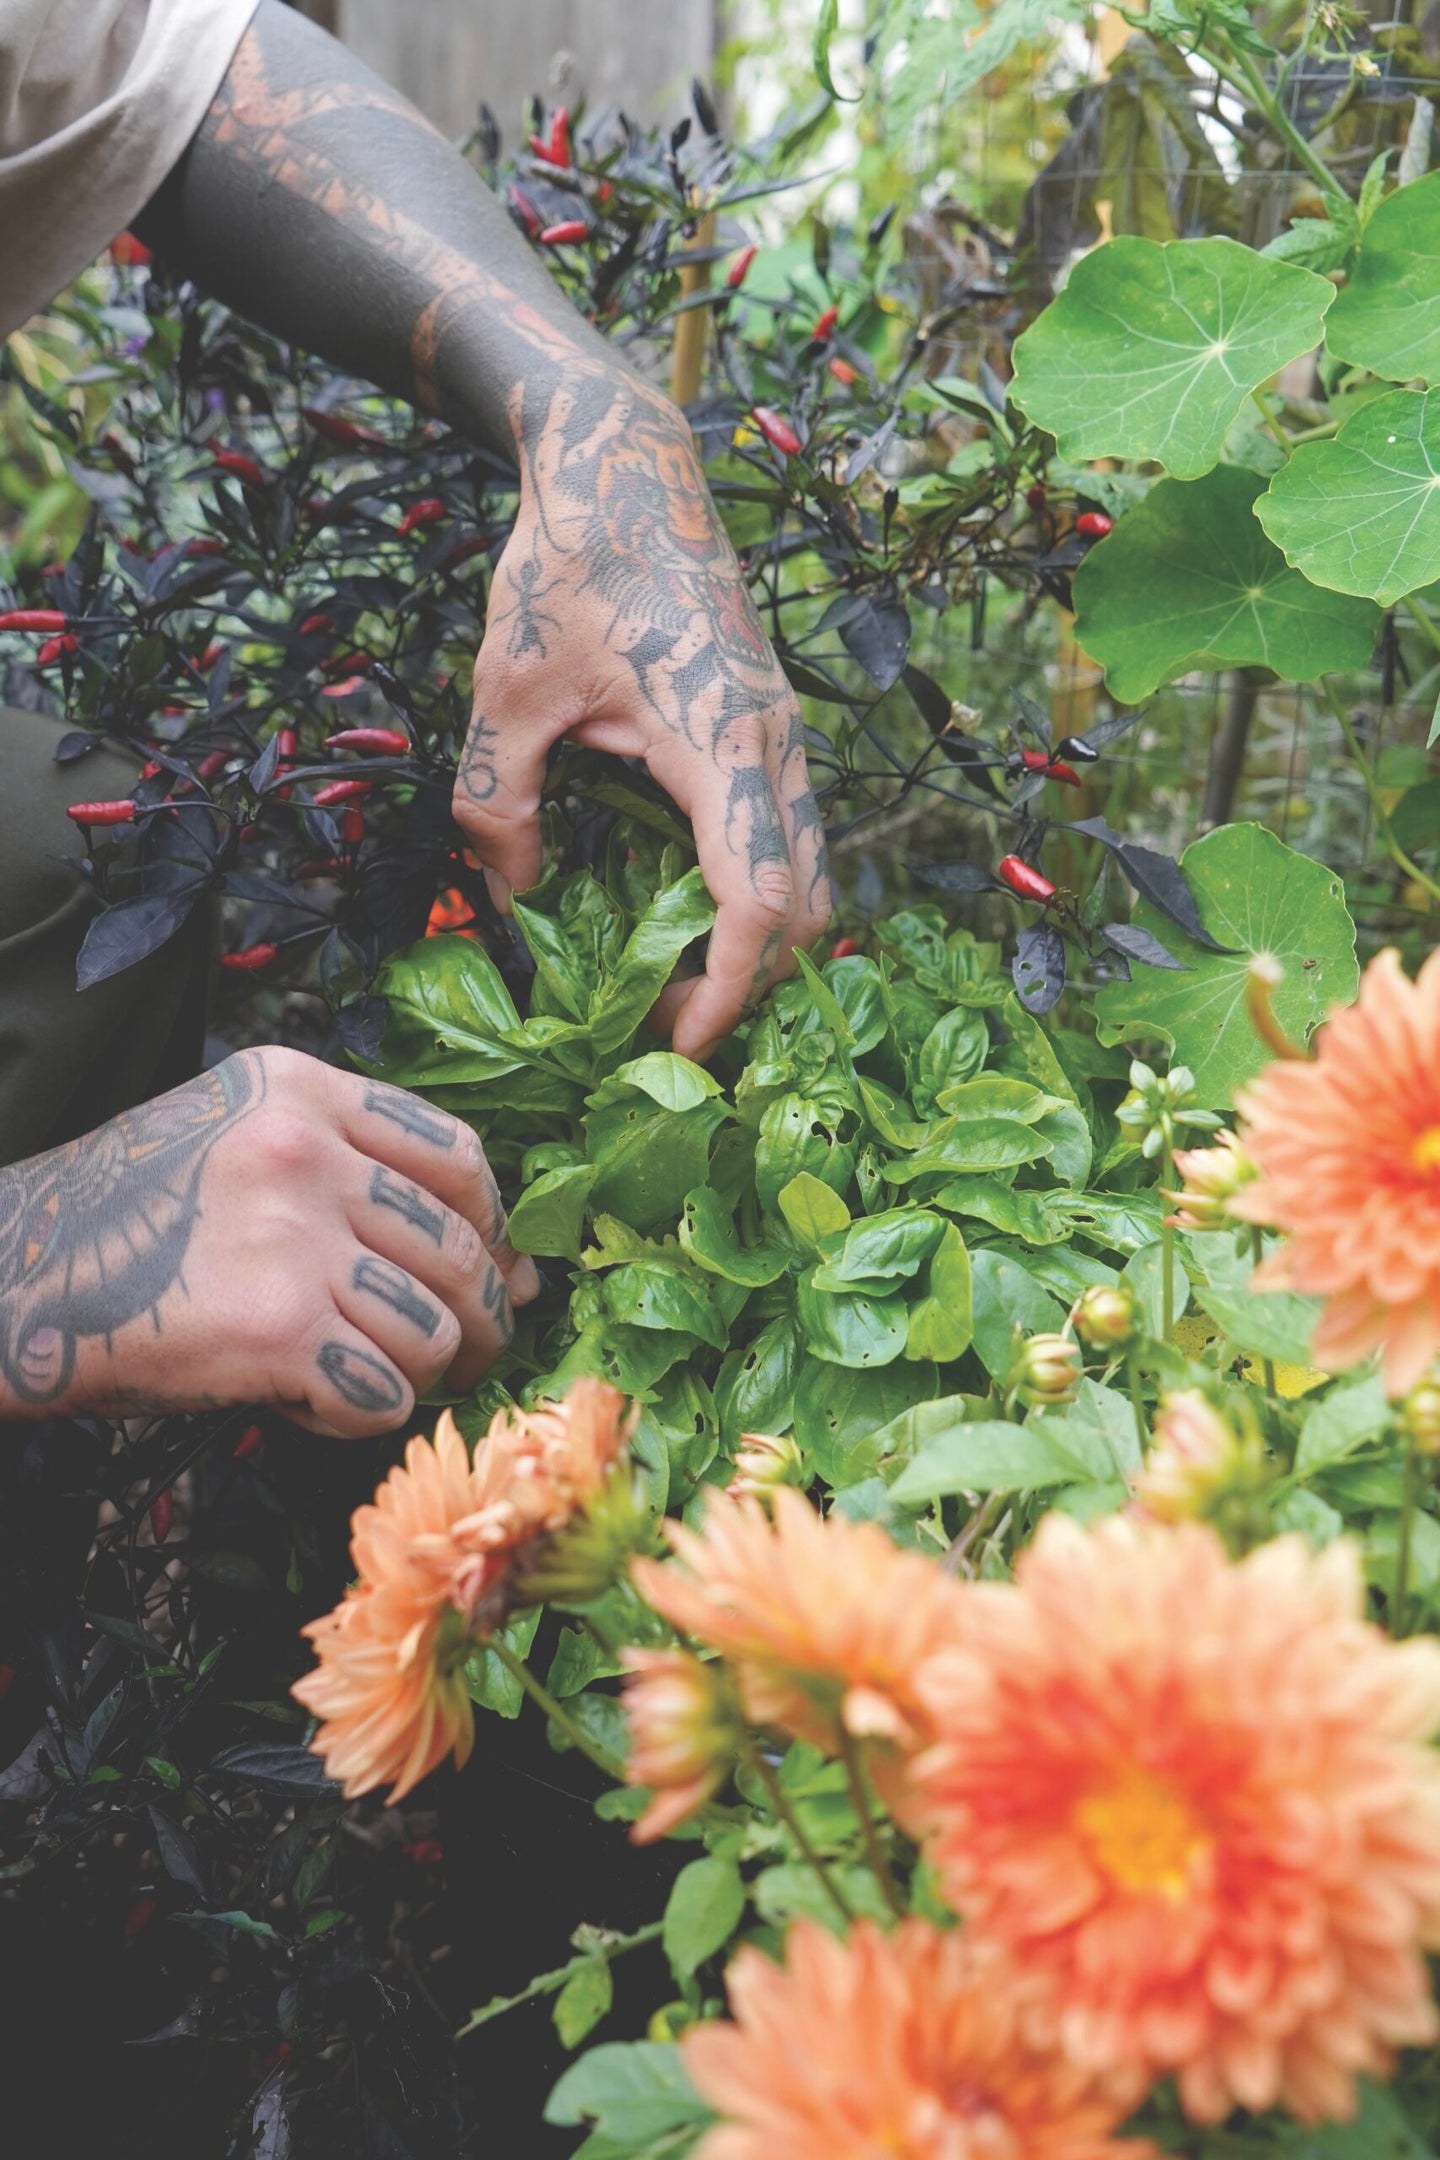 tattooed hands pruning flowers